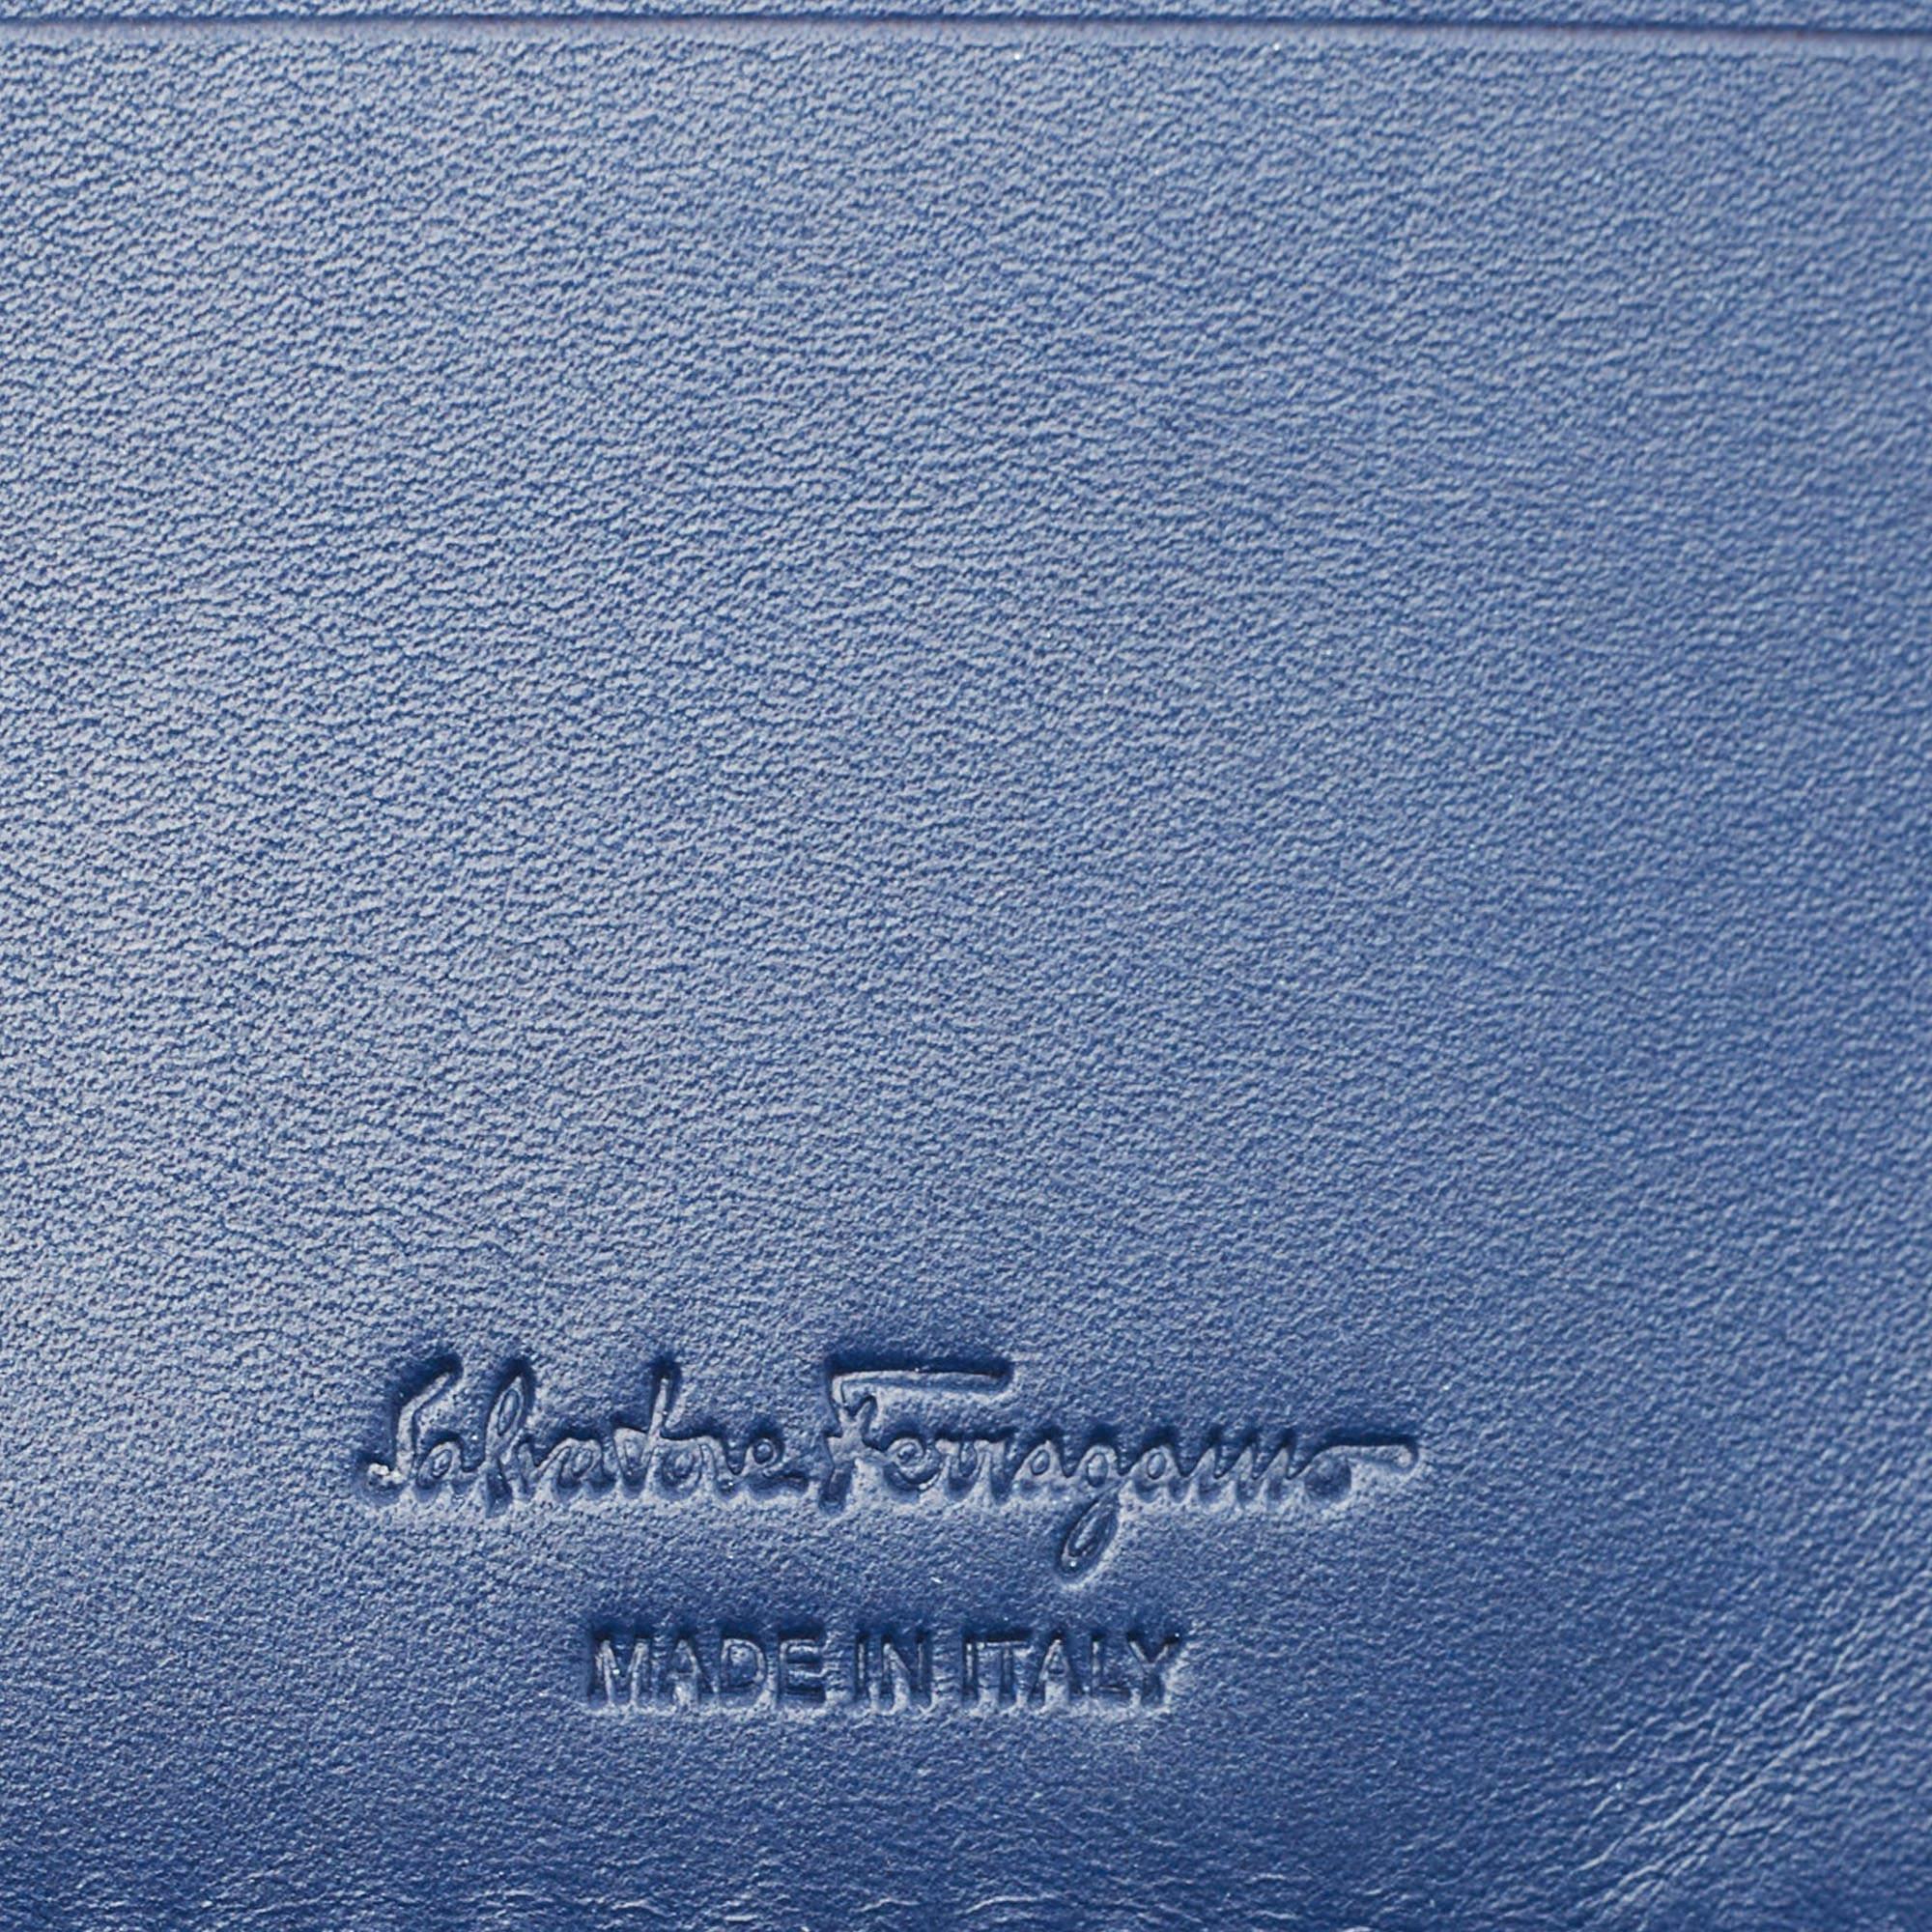 Salvatore Ferragamo Brown/Blue Leather Gancini Card Holder For Sale 4